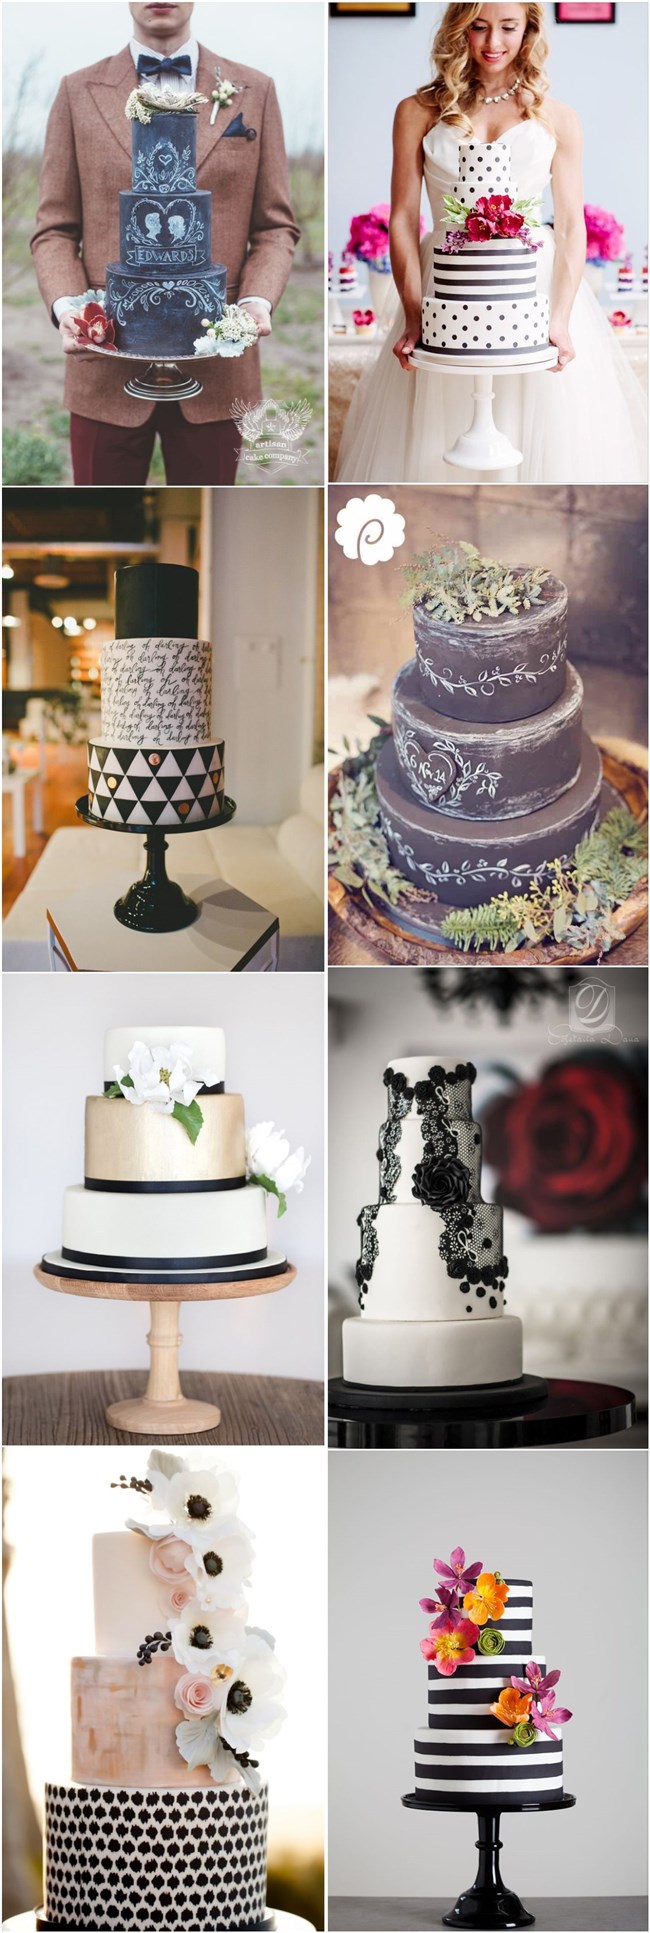 black and white wedding cakes- black and white wedding ideas